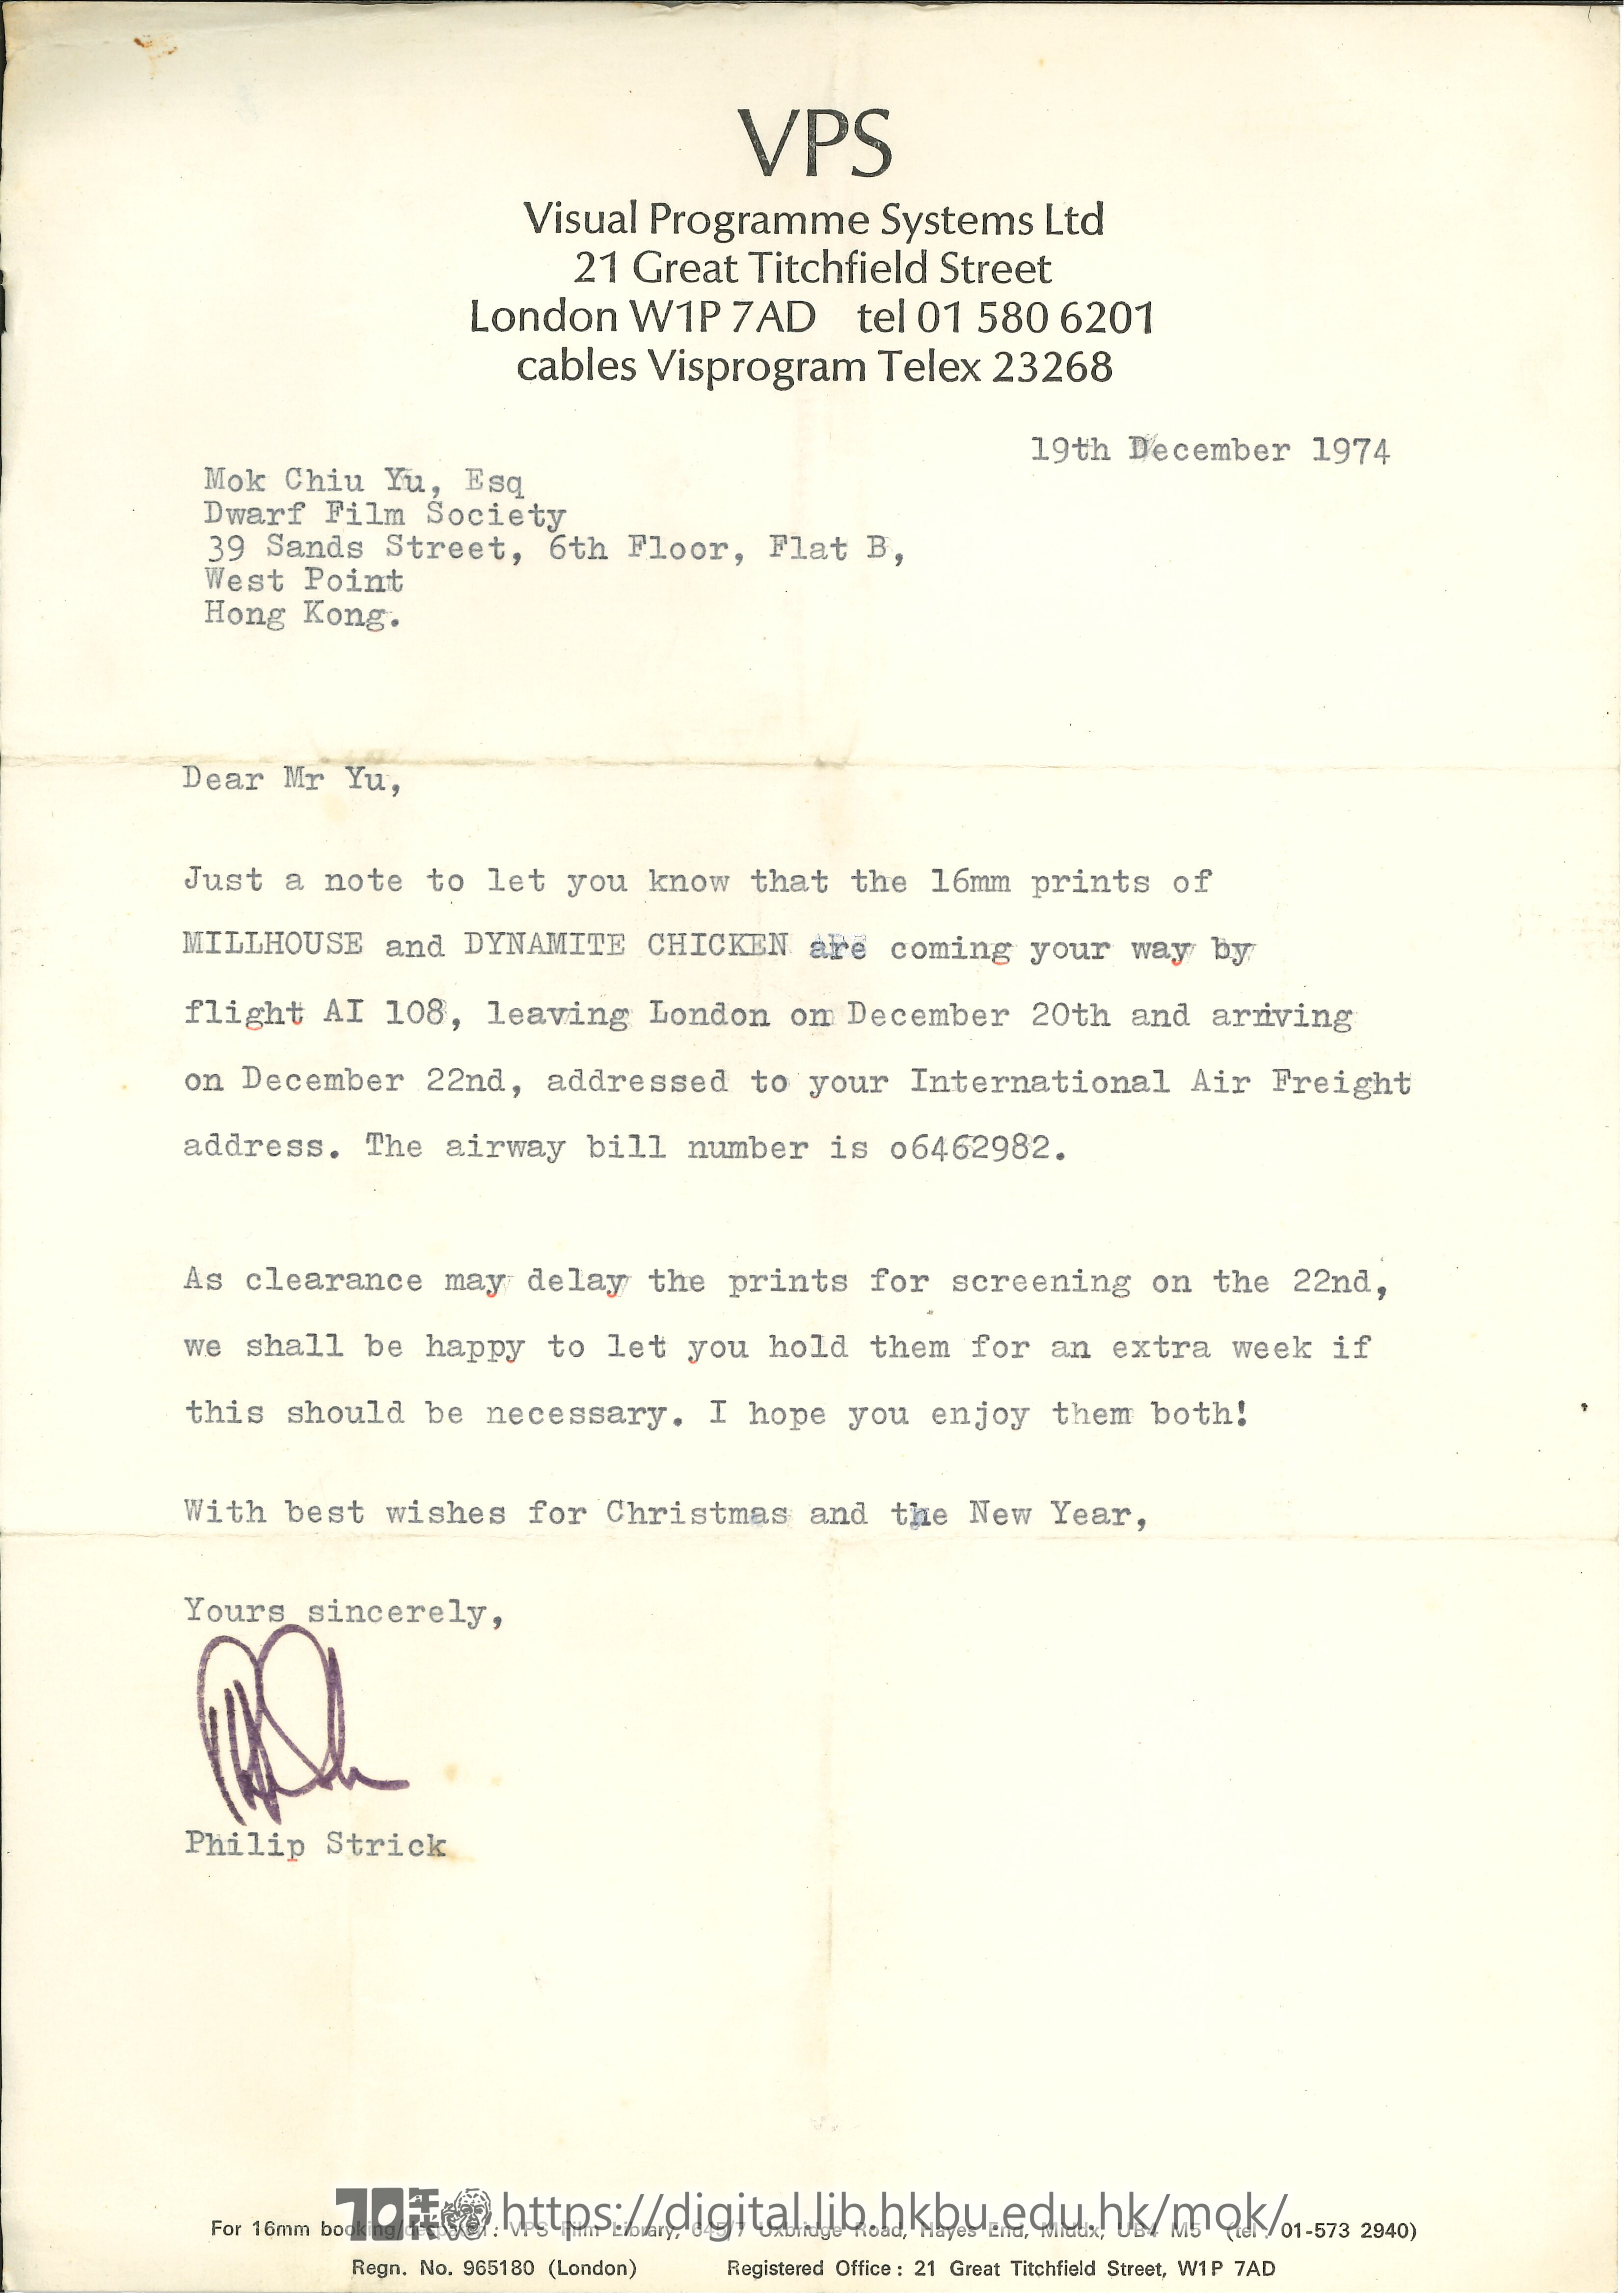   Letter from Philip Strick to Mok Chiu Yu STRICK, Philip 